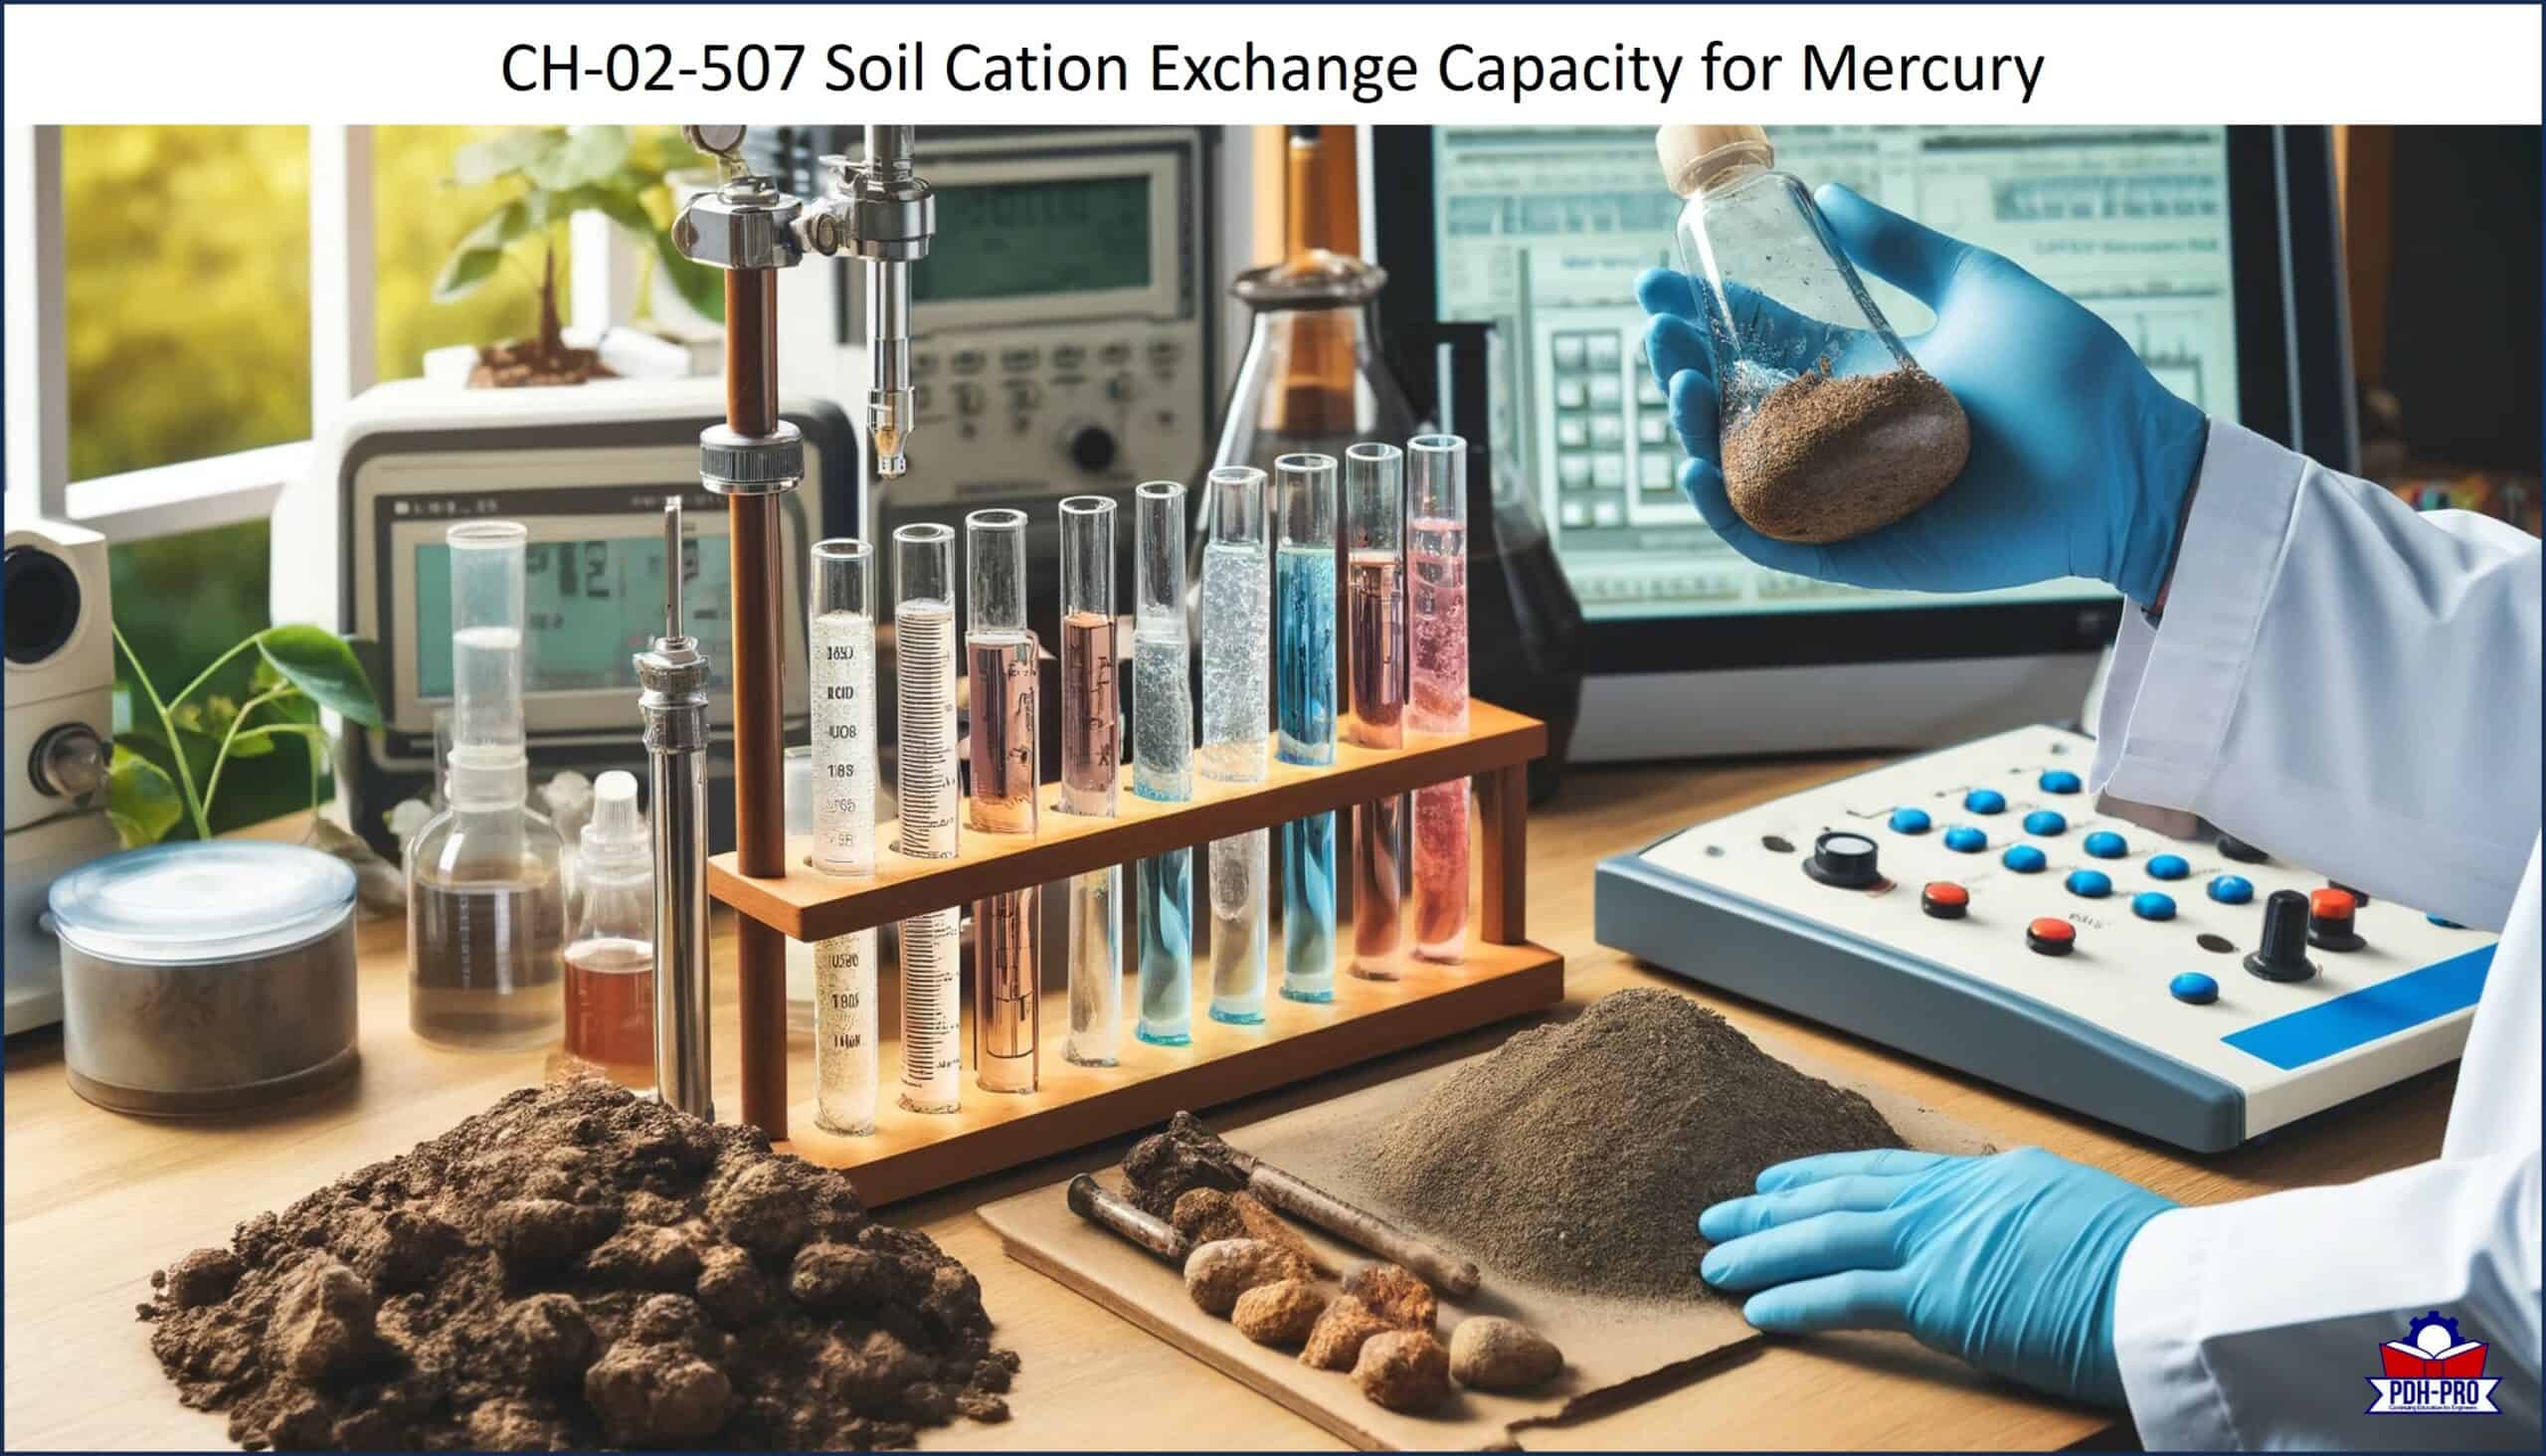 Soil Cation Exchange Capacity for Mercury